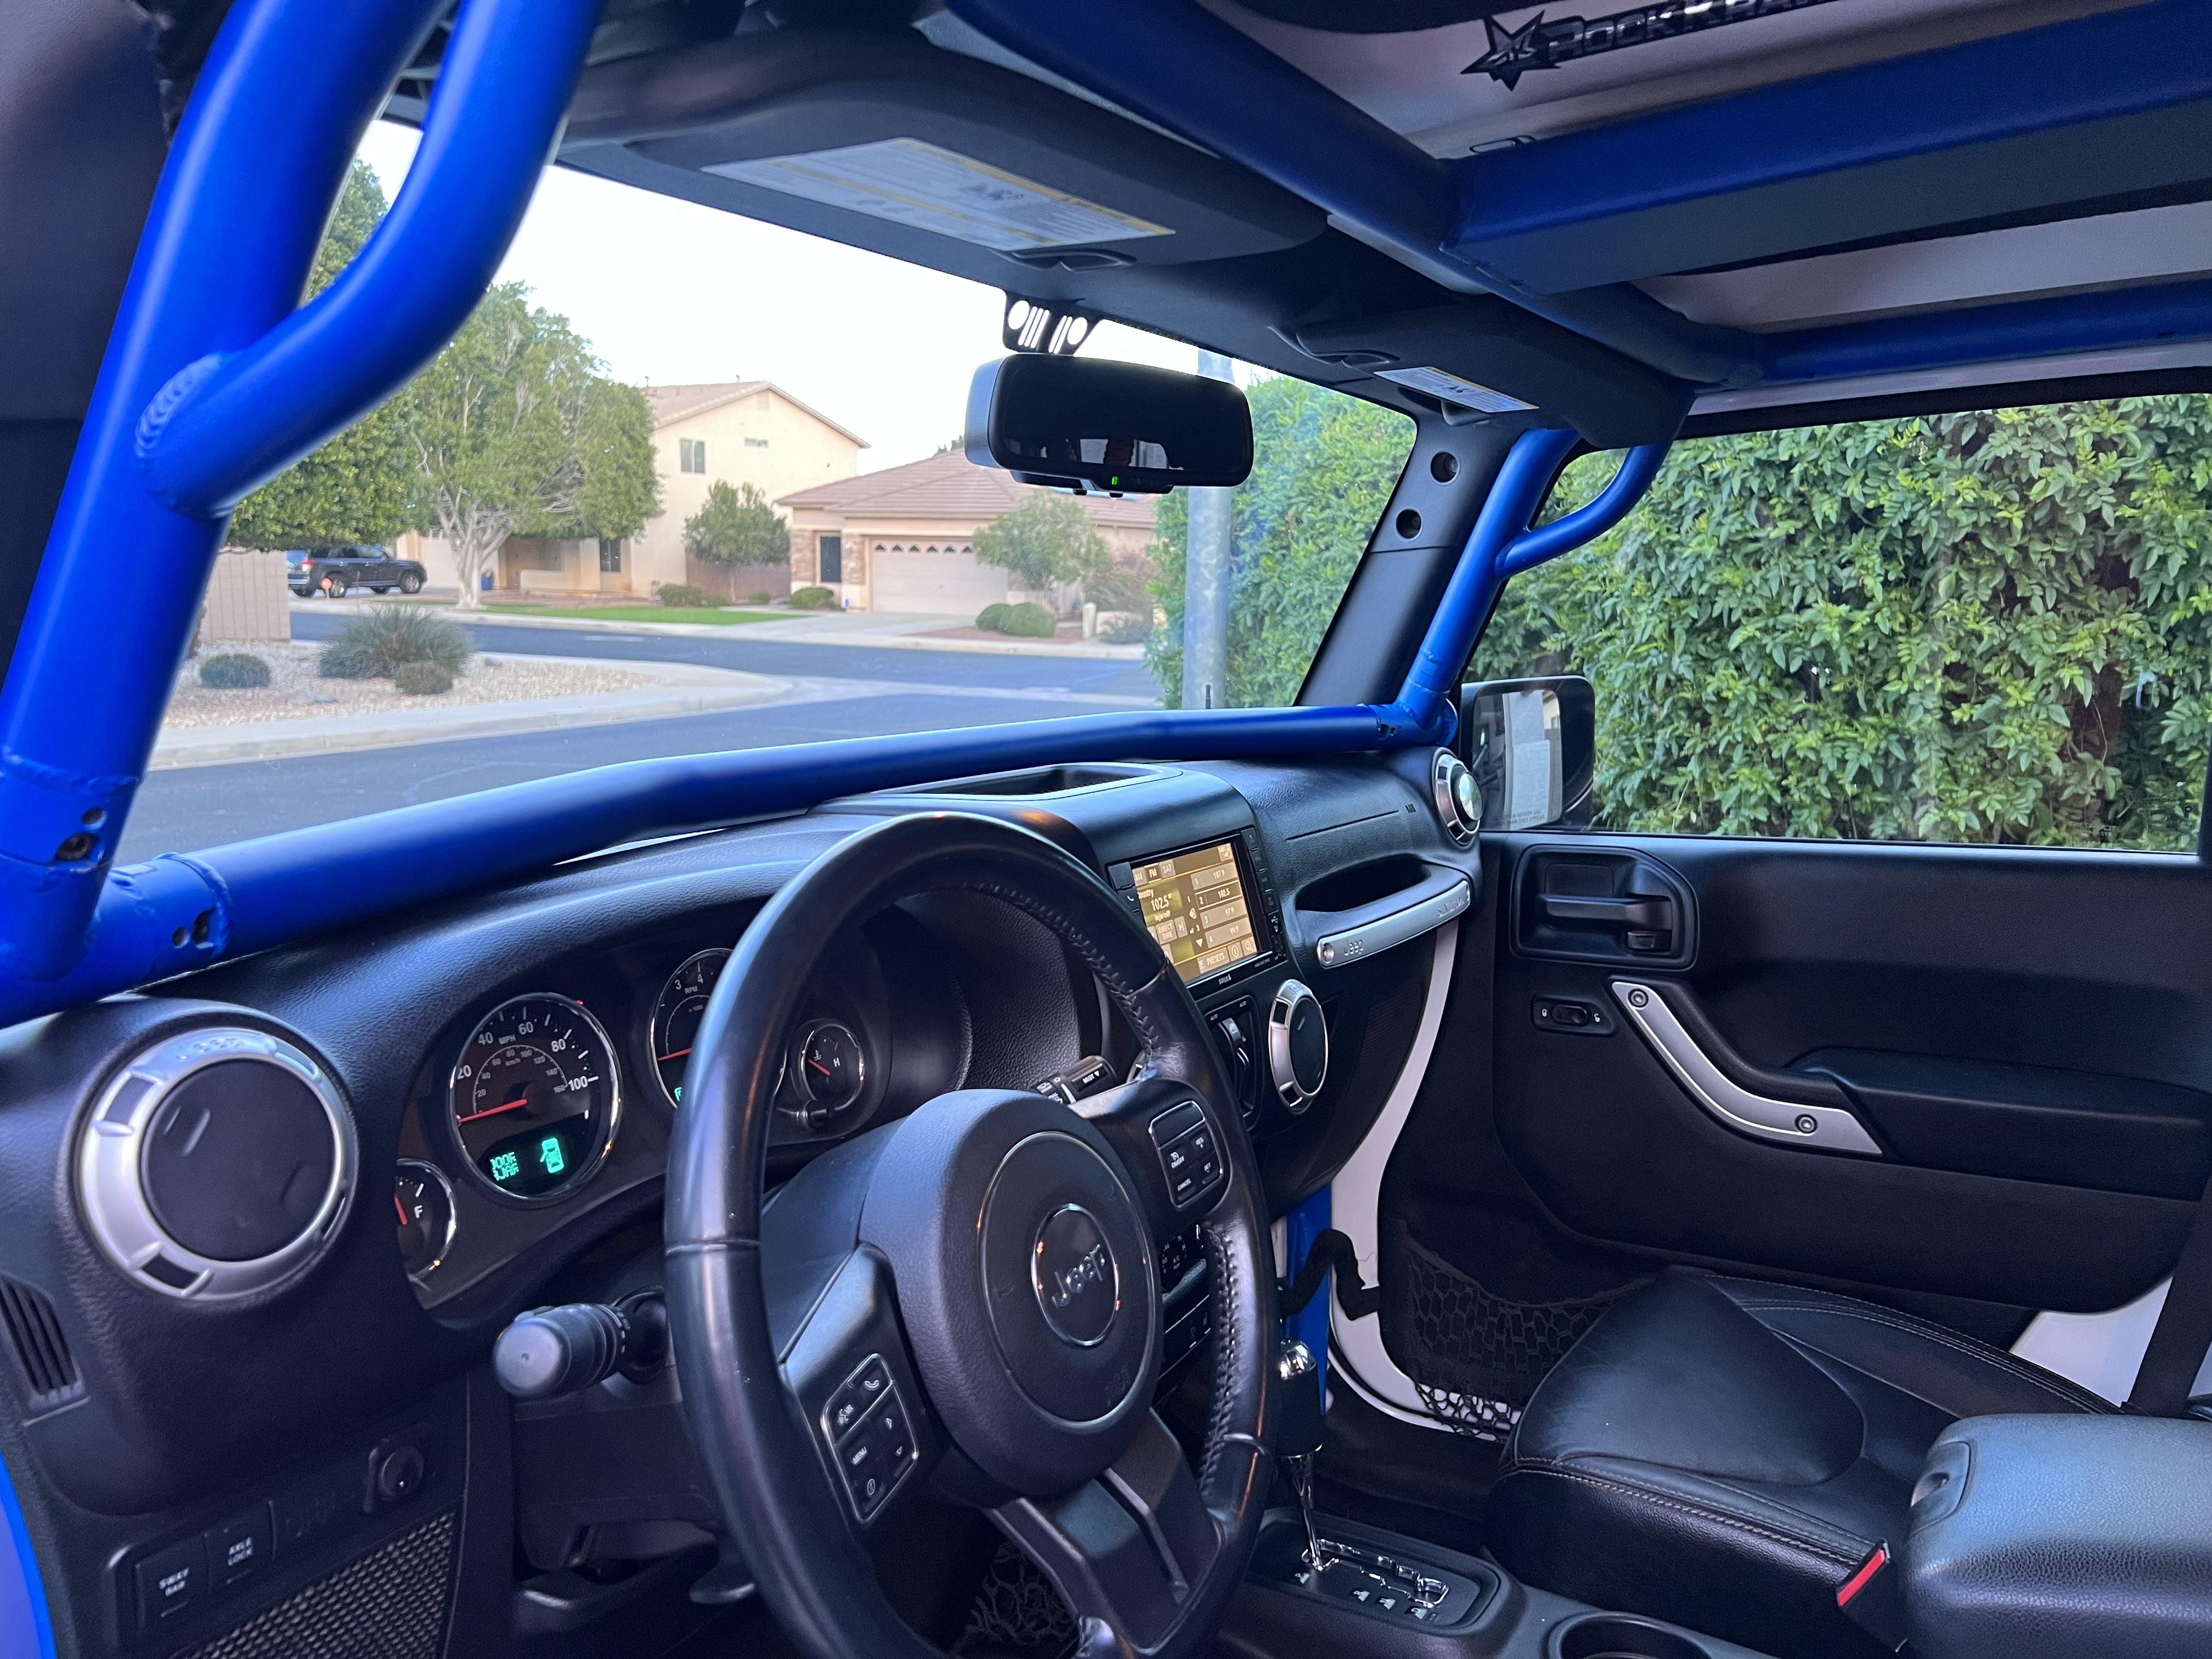 Used Jeep Wrangler Unlimited for Sale in Buckeye, AZ 